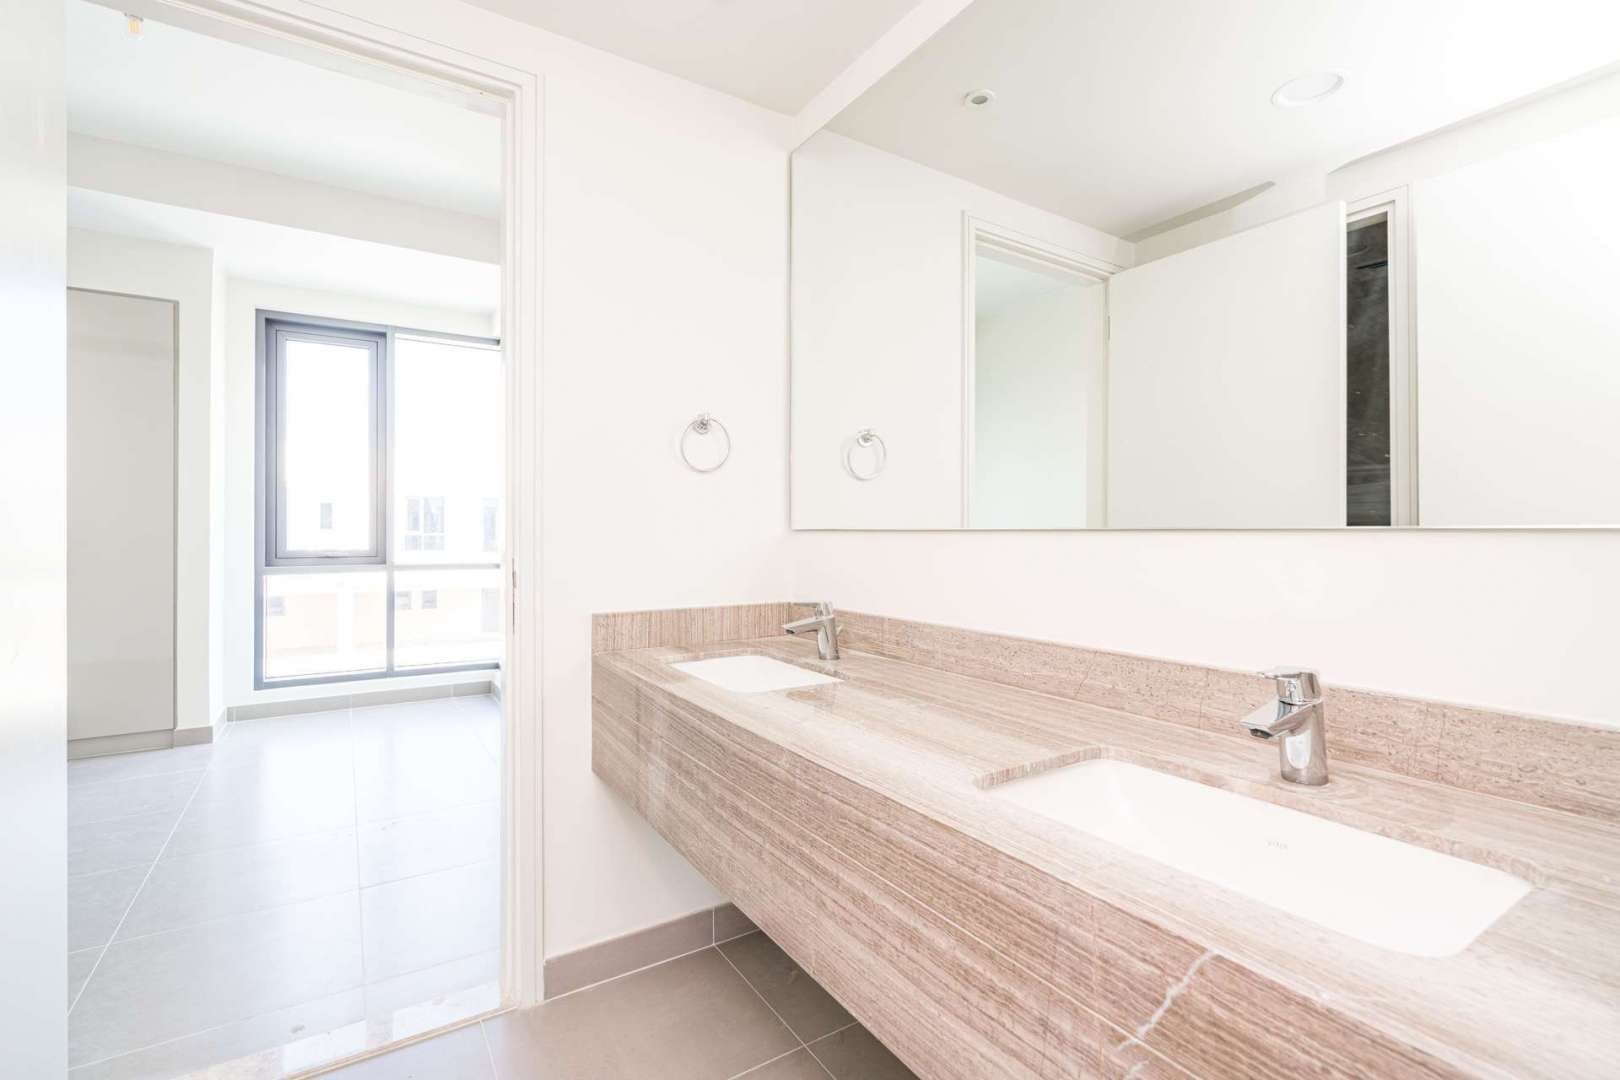 4 Bedroom Townhouse For Rent Maple At Dubai Hills Estate Lp08838 1bf8d6e00386b600.jpg